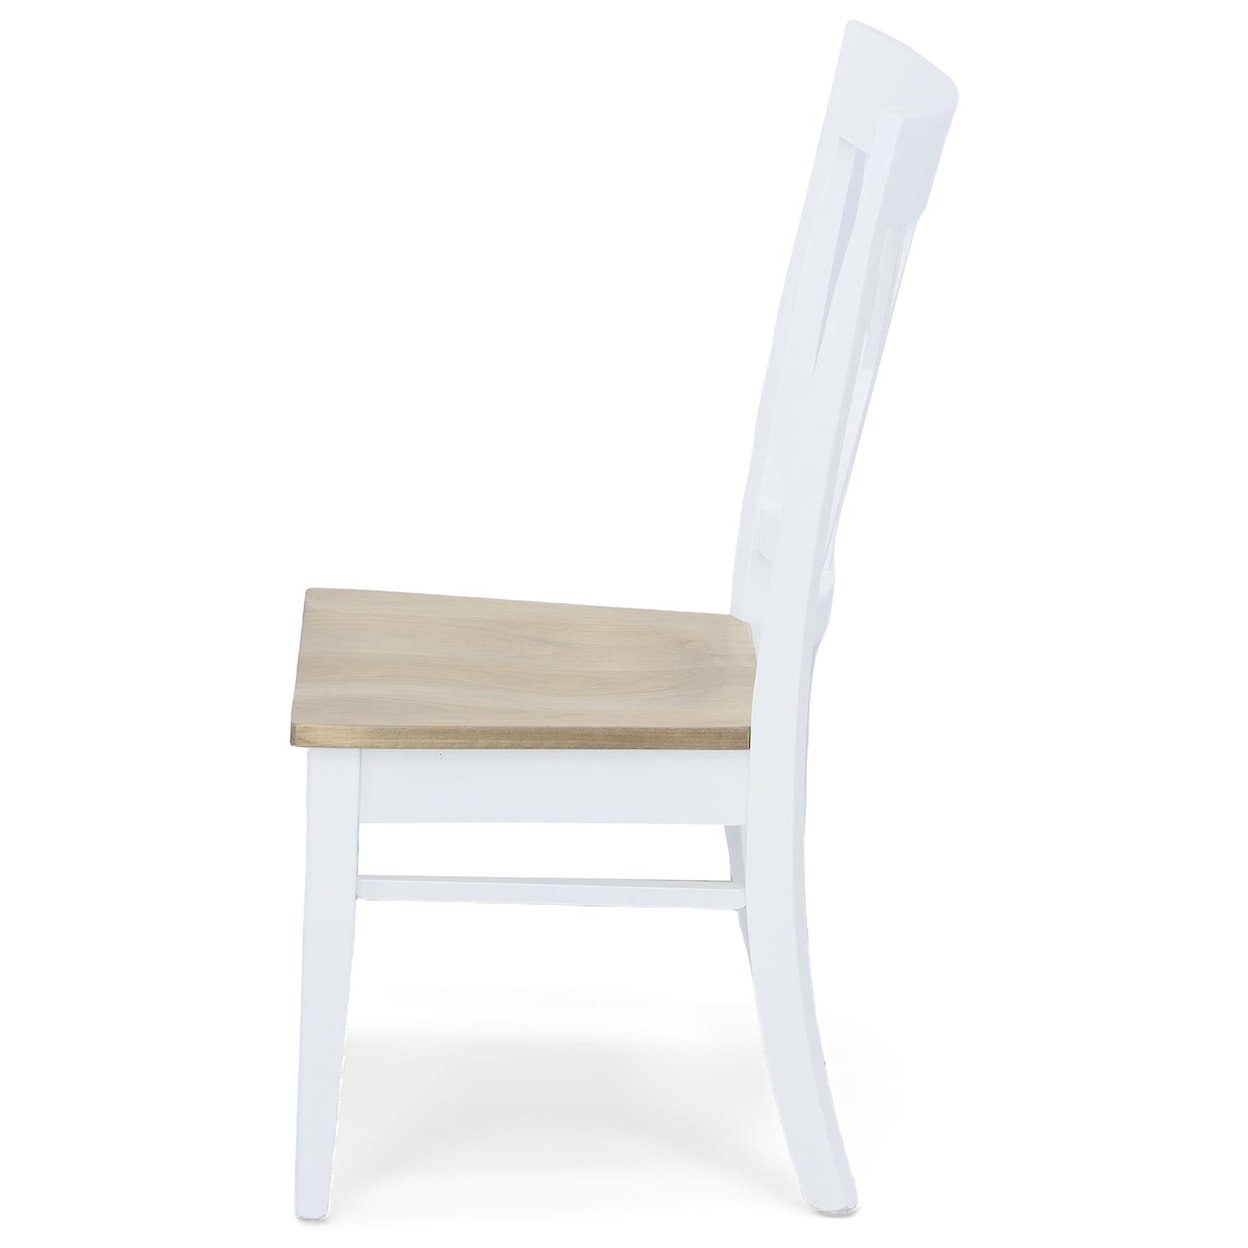 Archbold Furniture Amish Essentials Casual Dining Emmett Chair